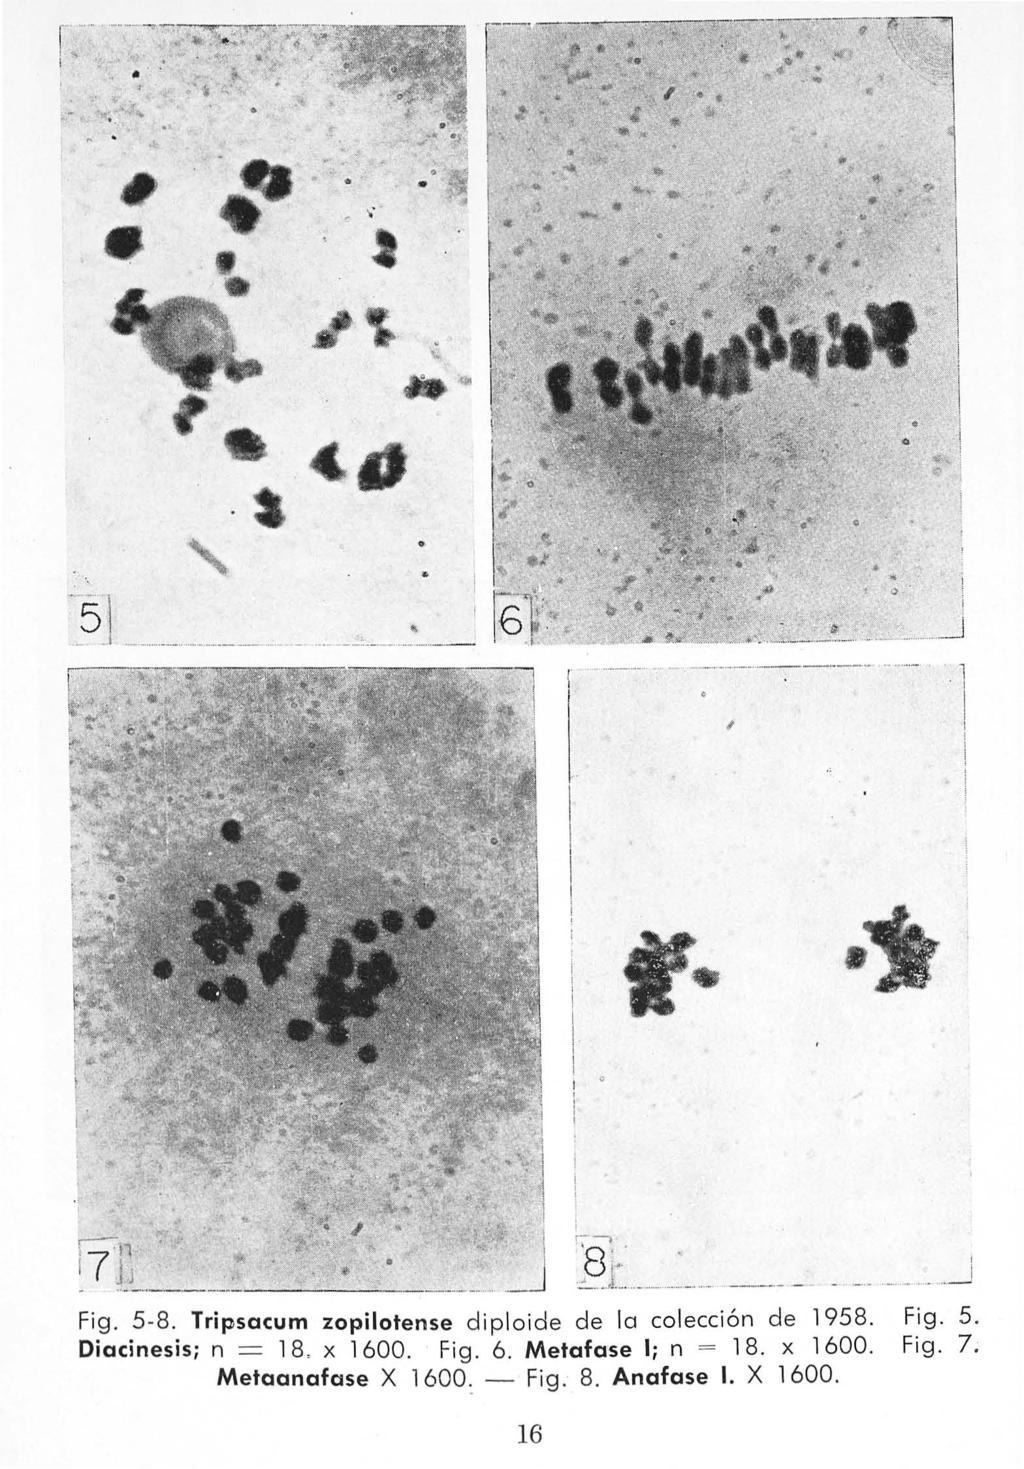 r-... '..,, ' Fig. 5-8. Tripsacum zopilotense diploide de la colección de 958. Diacinesis; n = 8. x 600.